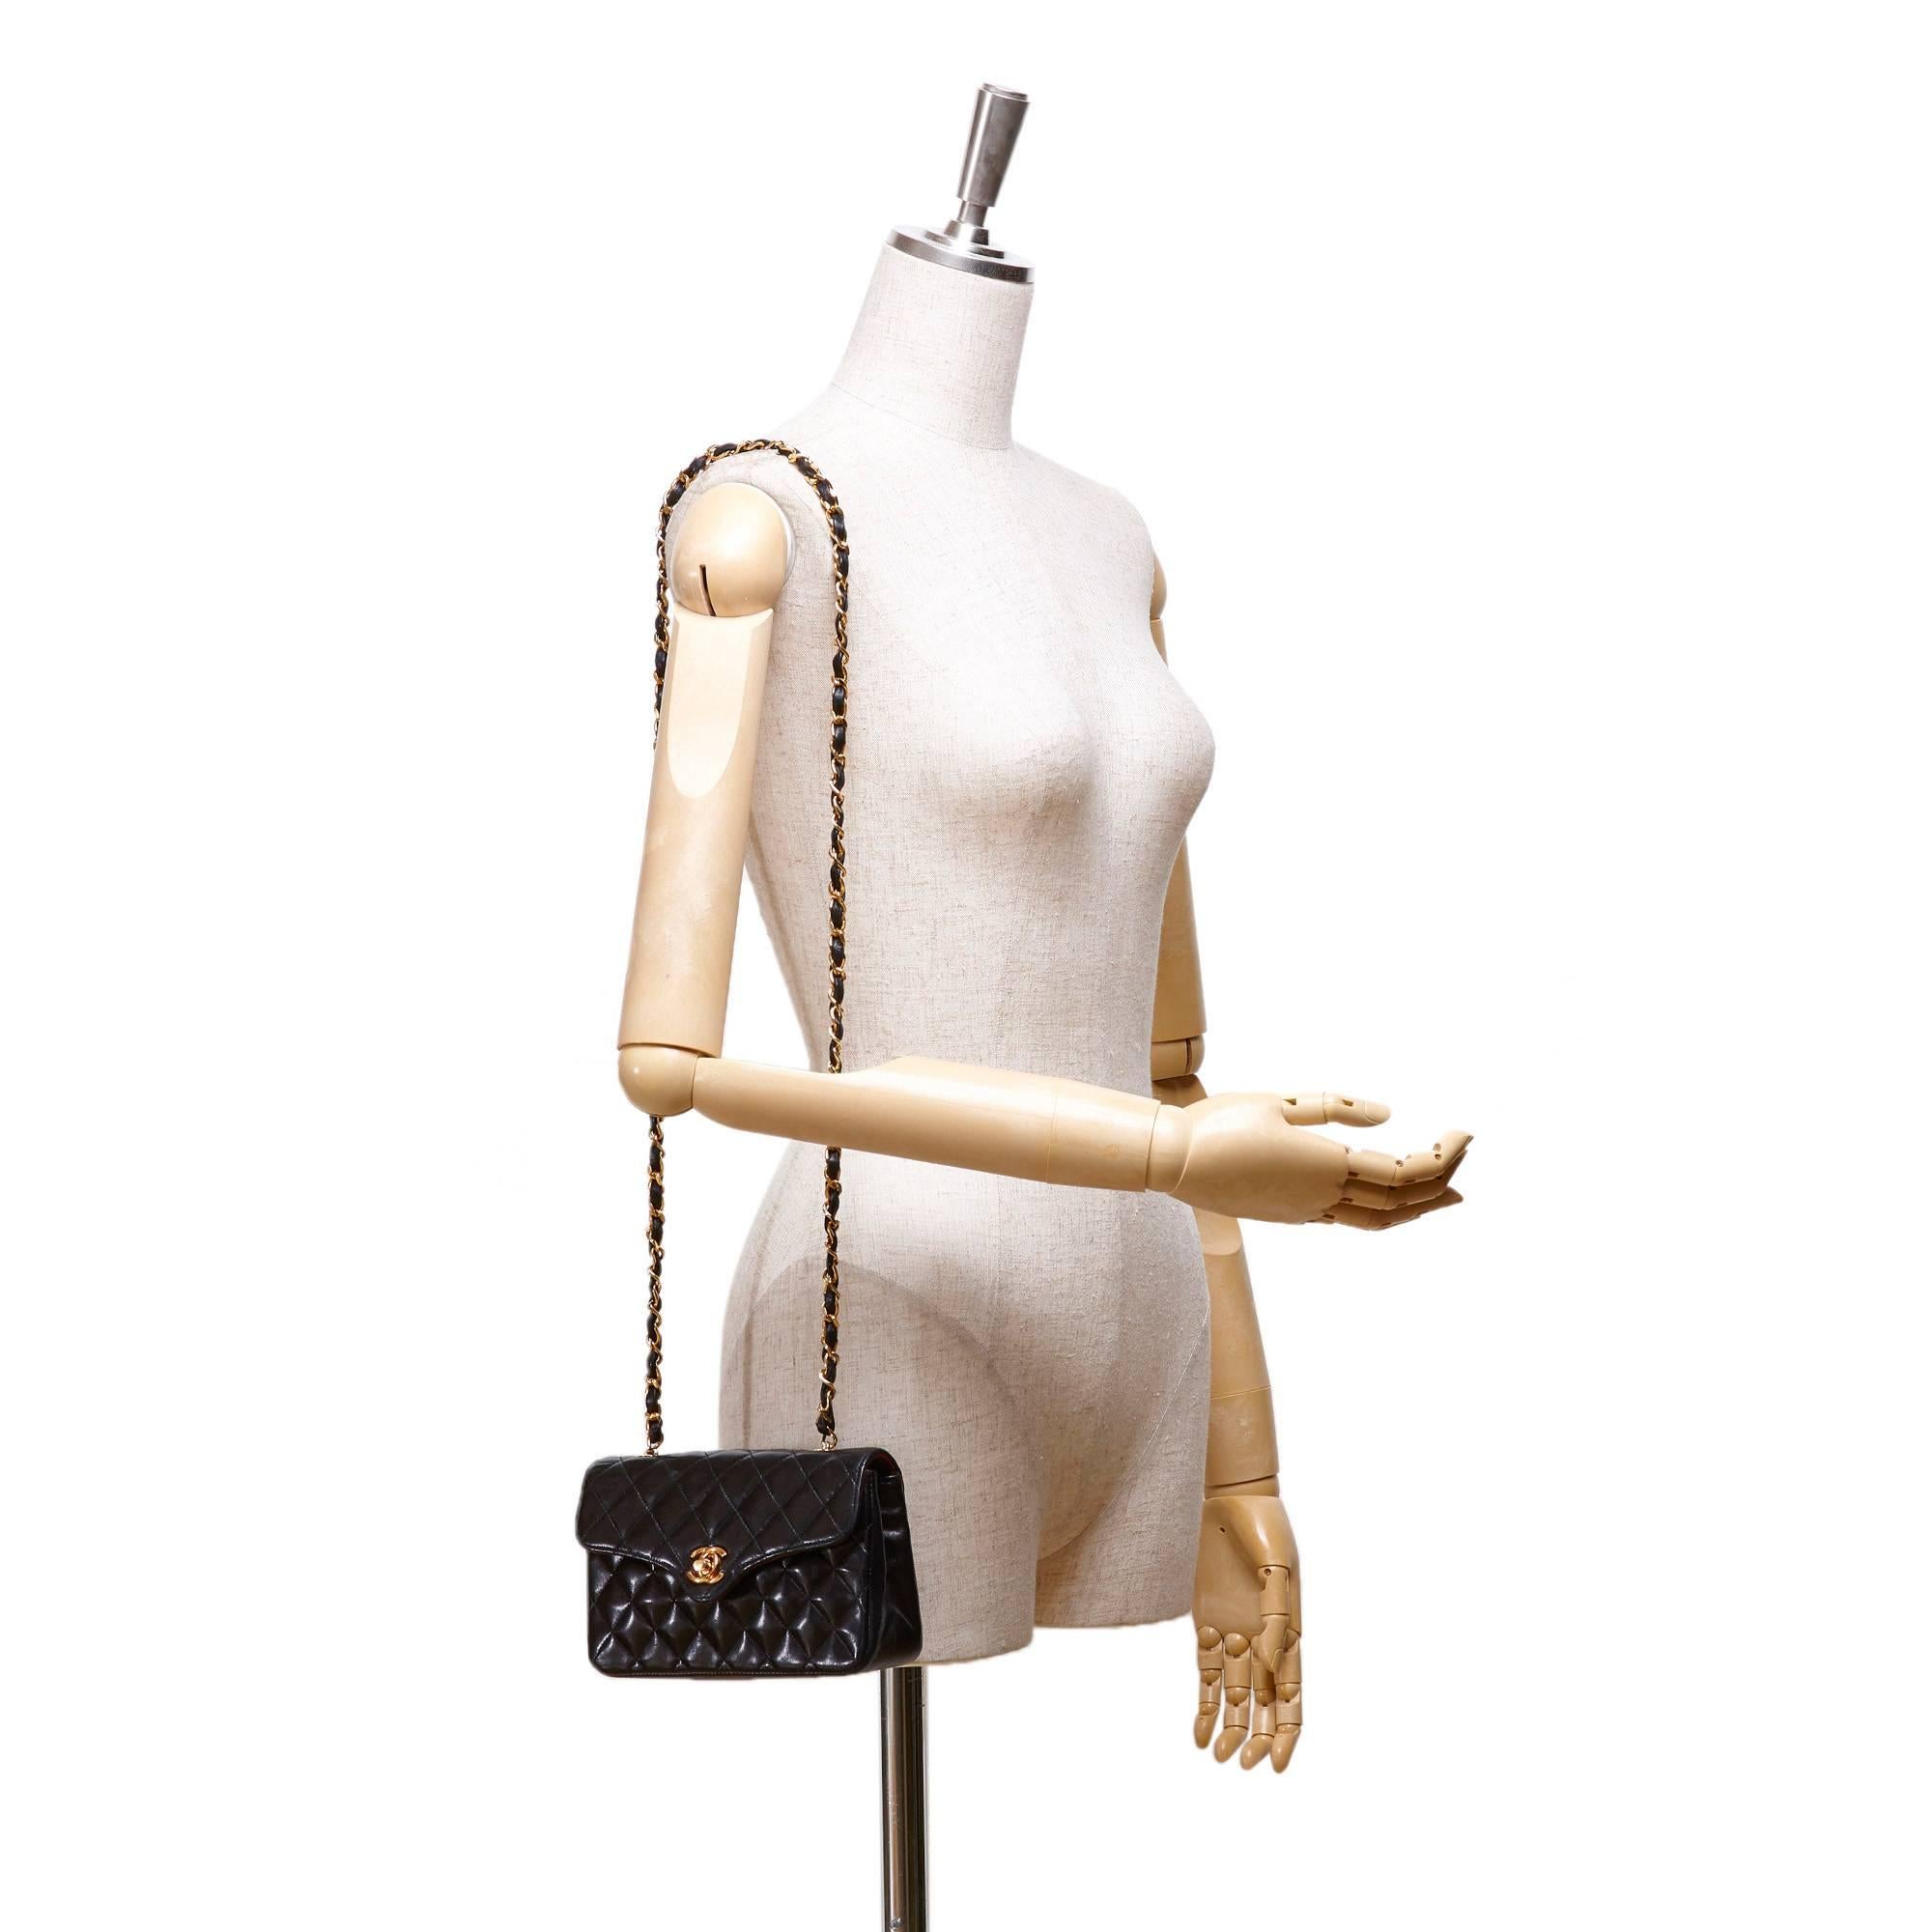 - Vintage 80s Chanel black mini Matelasse quilted lambskin leather shoulder bag. 

- Gold toned chain shoulder strap.

- Front flap with gold toned "CC" interlock closure. 

- Interior slip pocket.
 
- Size: 18cm x 12cm x 5.5cm. Shoulder